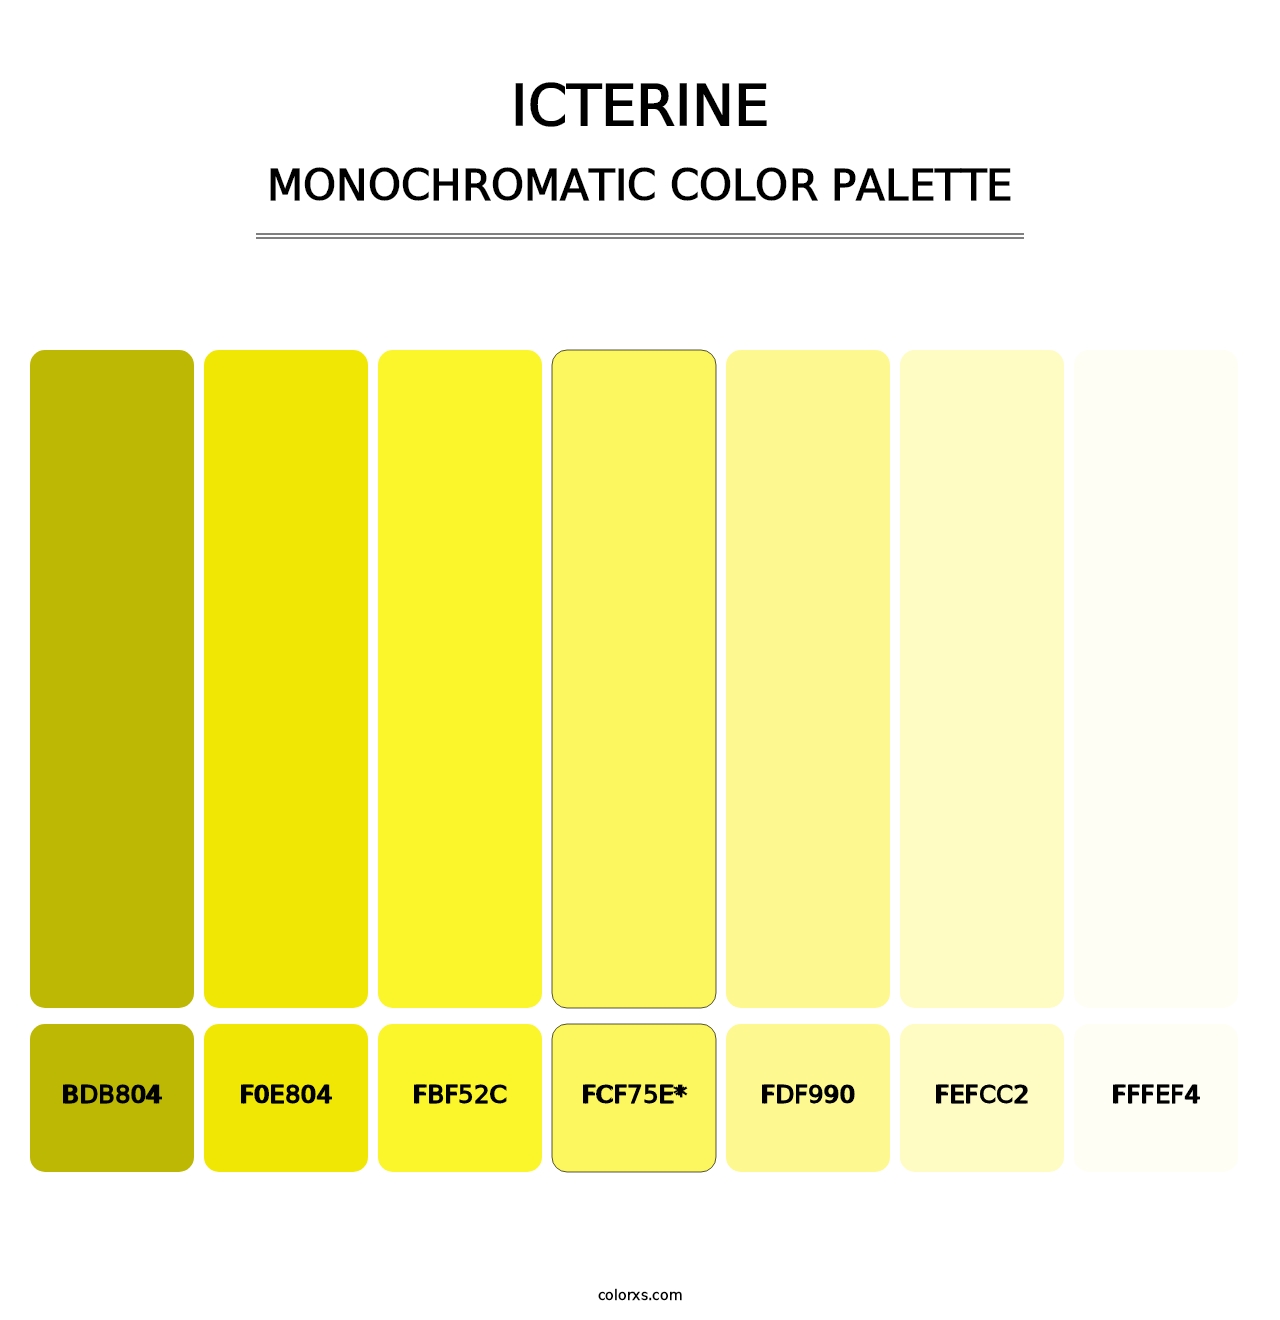 Icterine - Monochromatic Color Palette